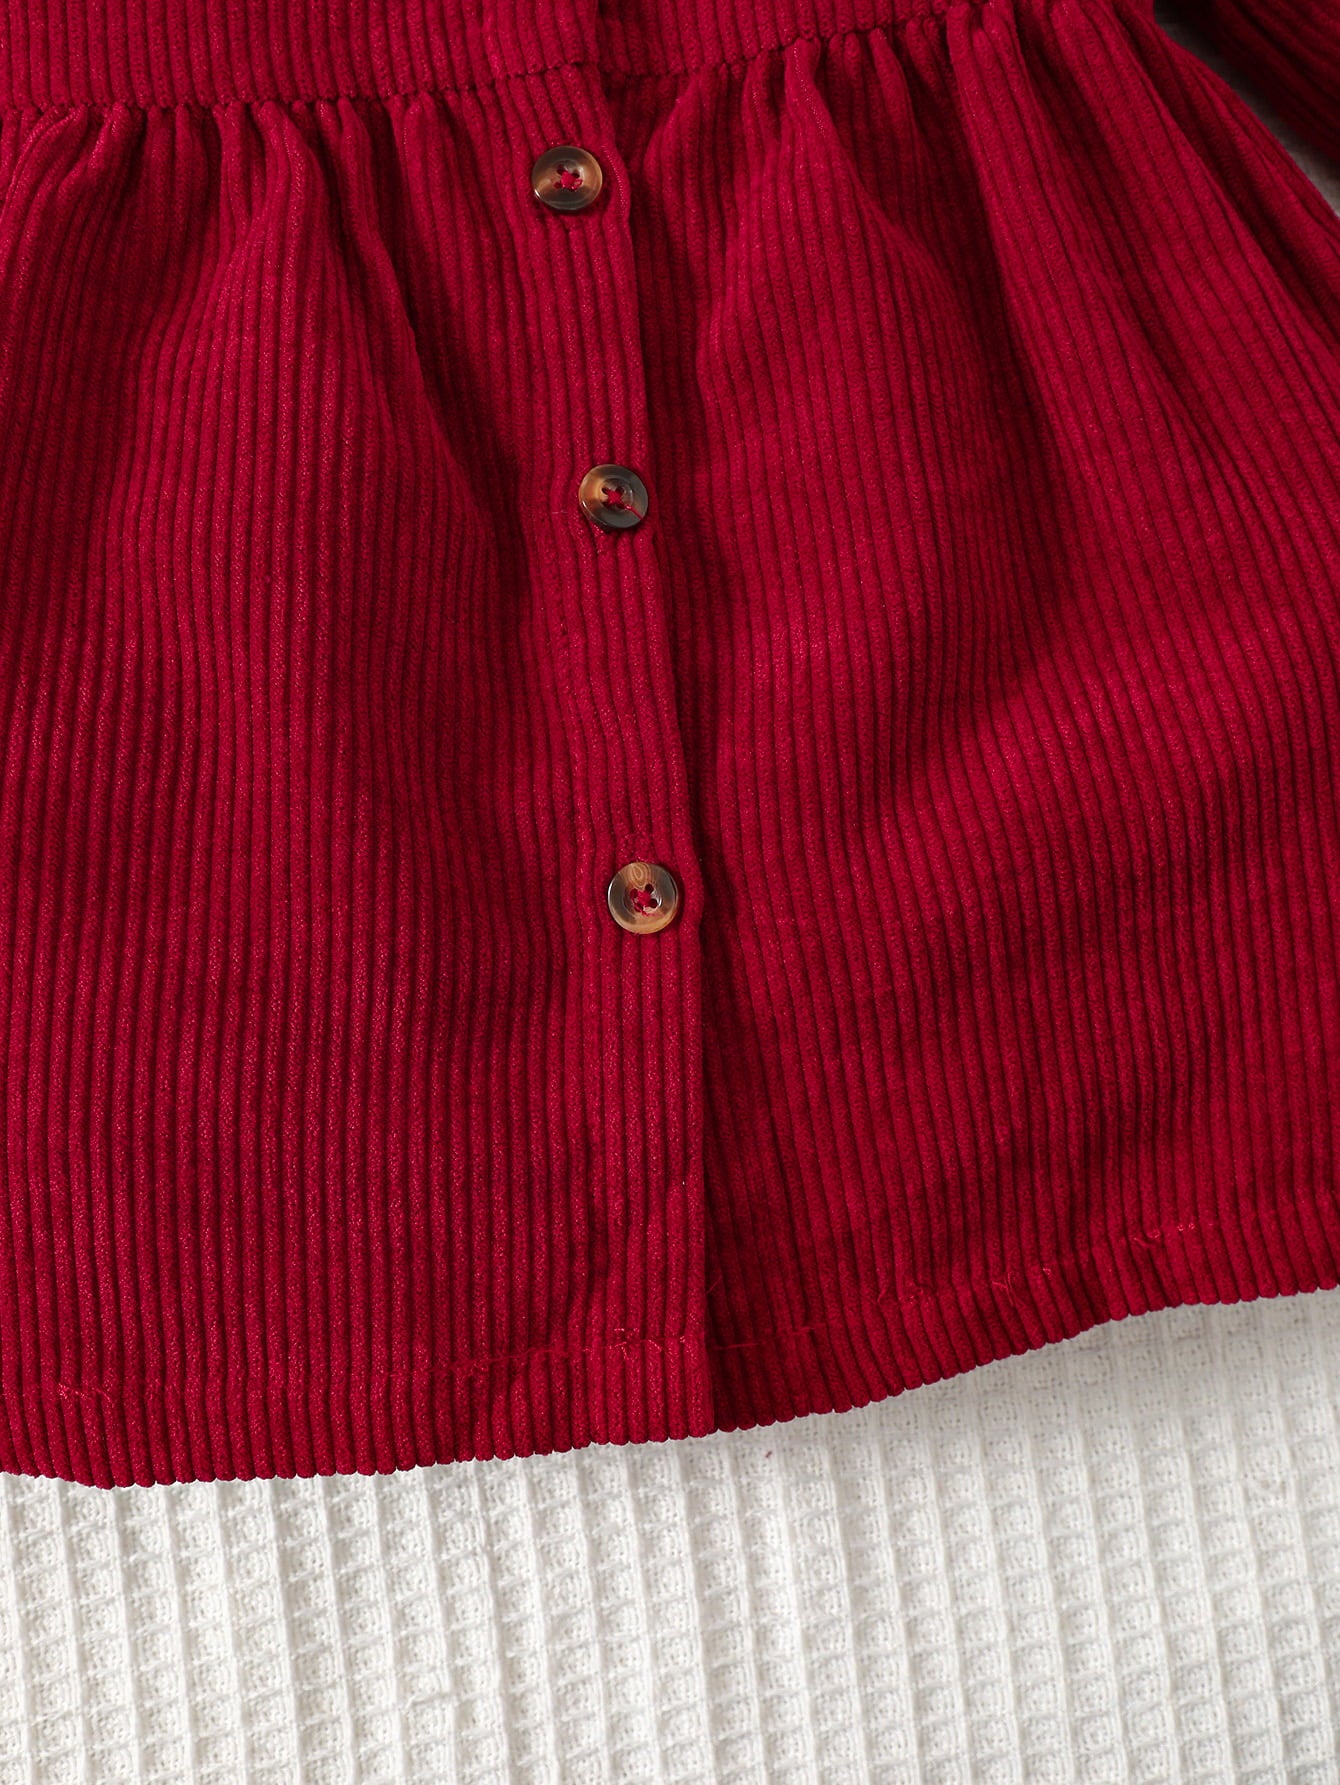 Uylee's Boutique Peter Pan Collar Buttoned Long Sleeve Dress